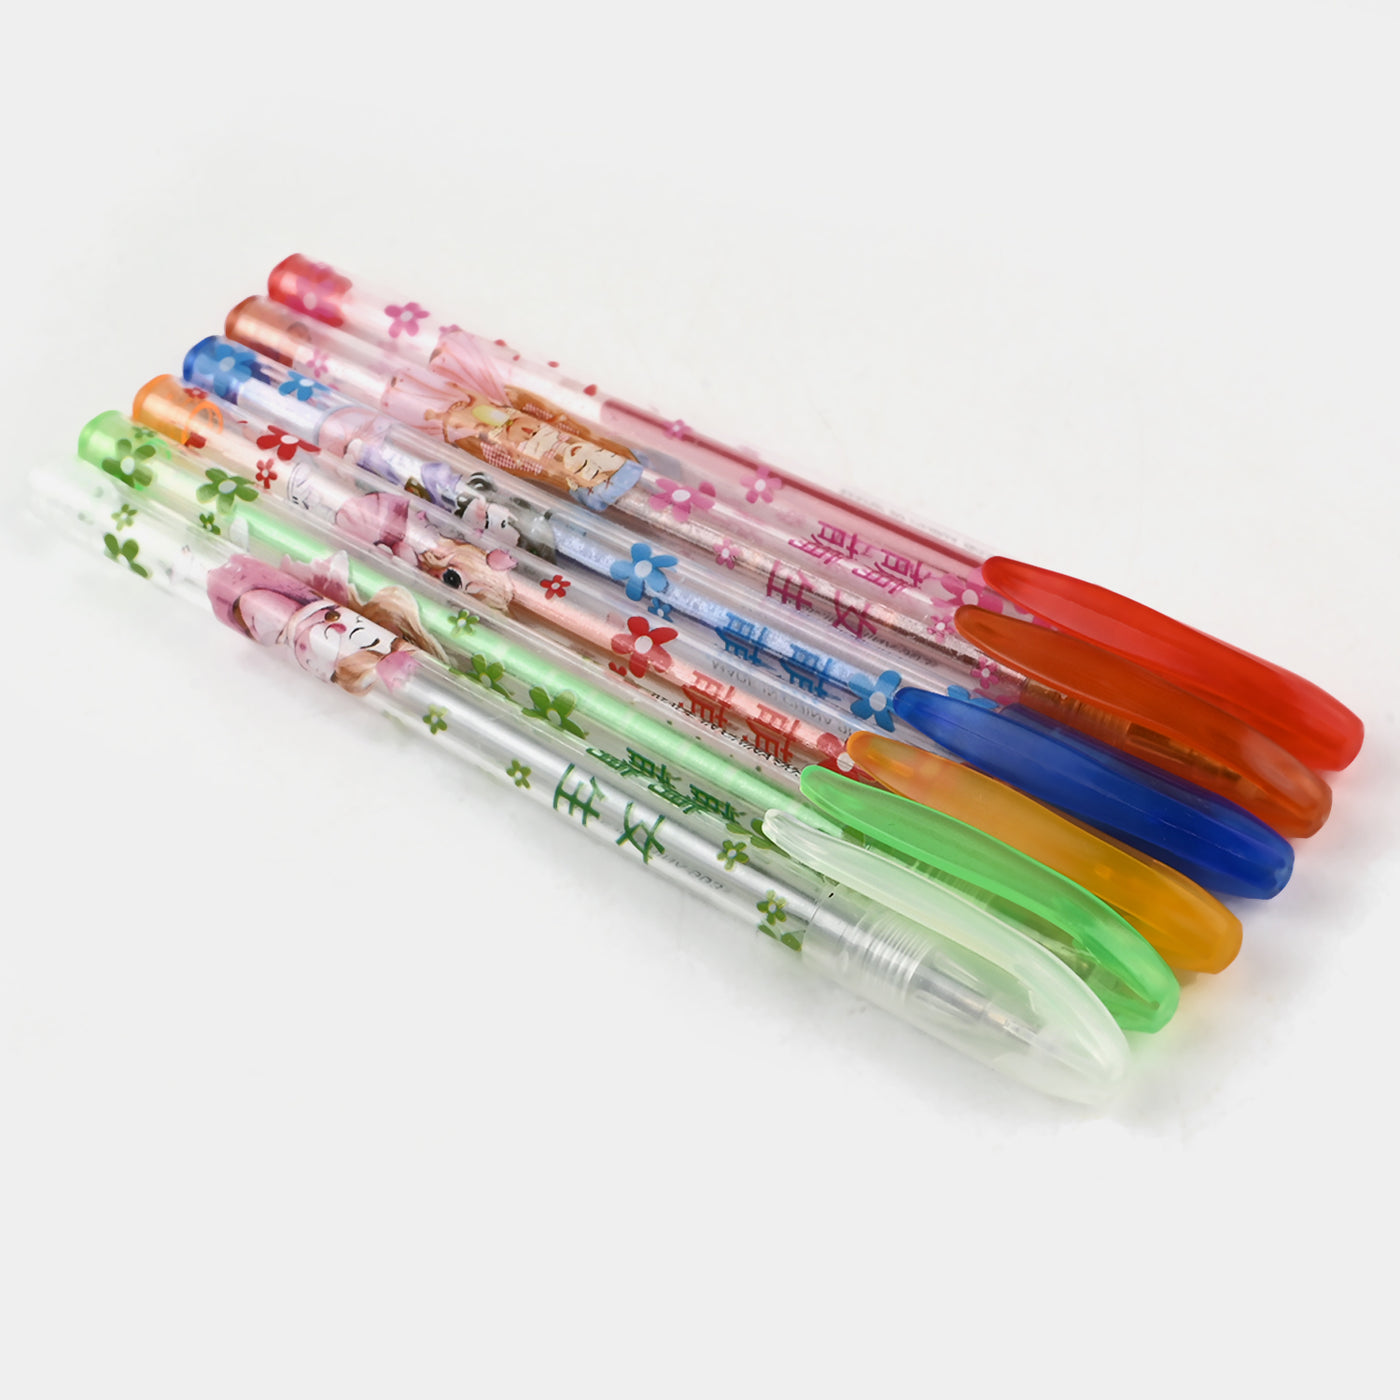 Glitter Color Pen 18Pcs Set For kids